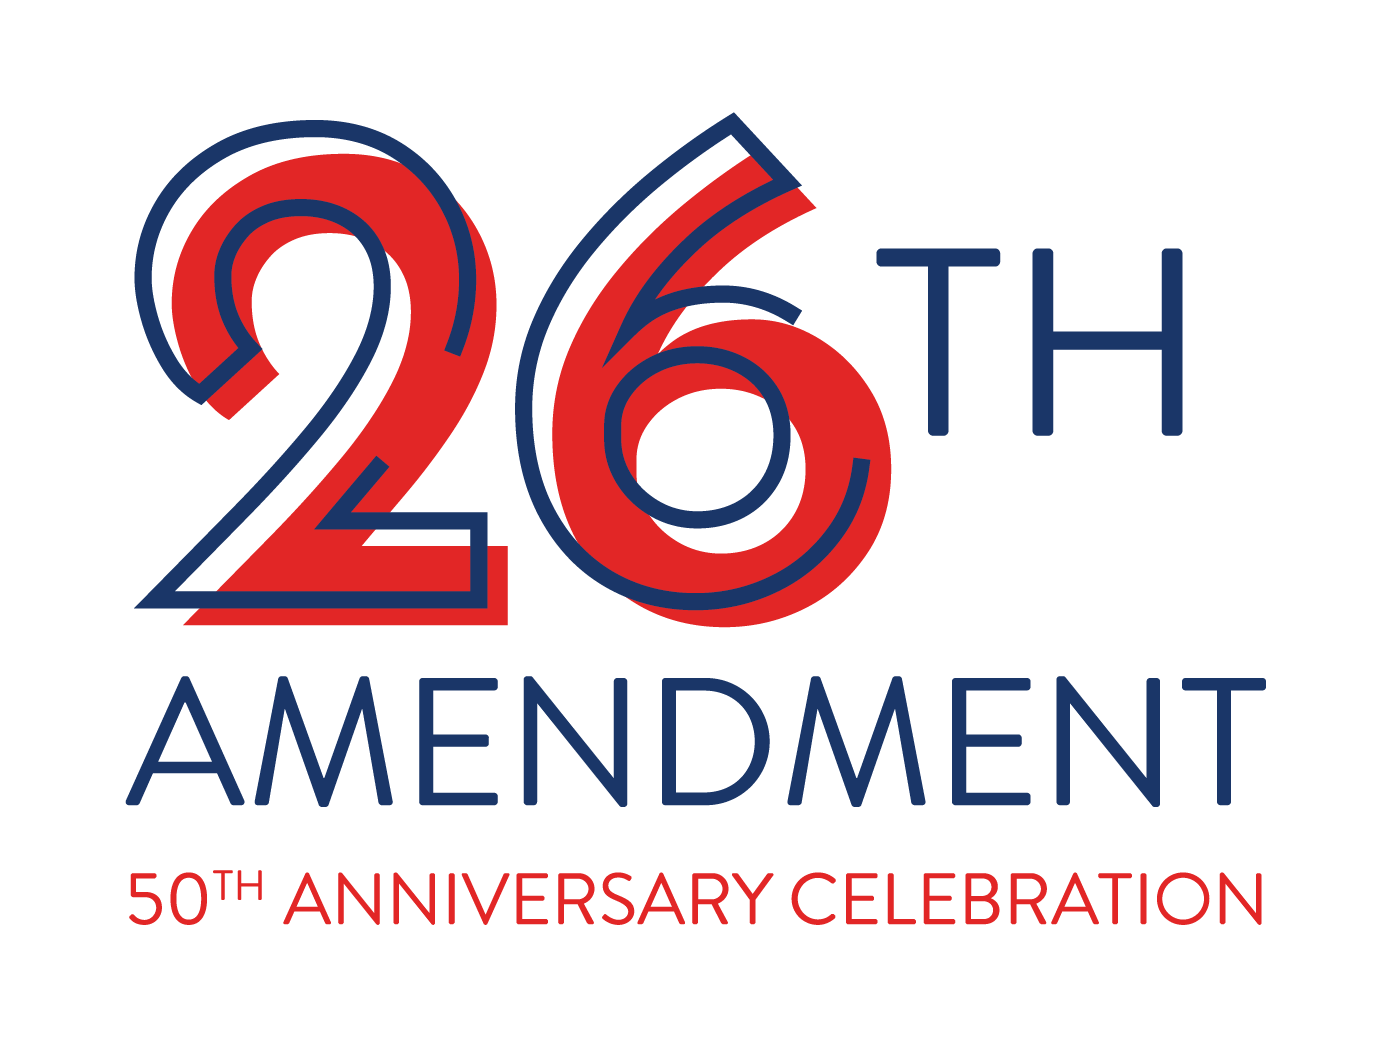 26th amendment